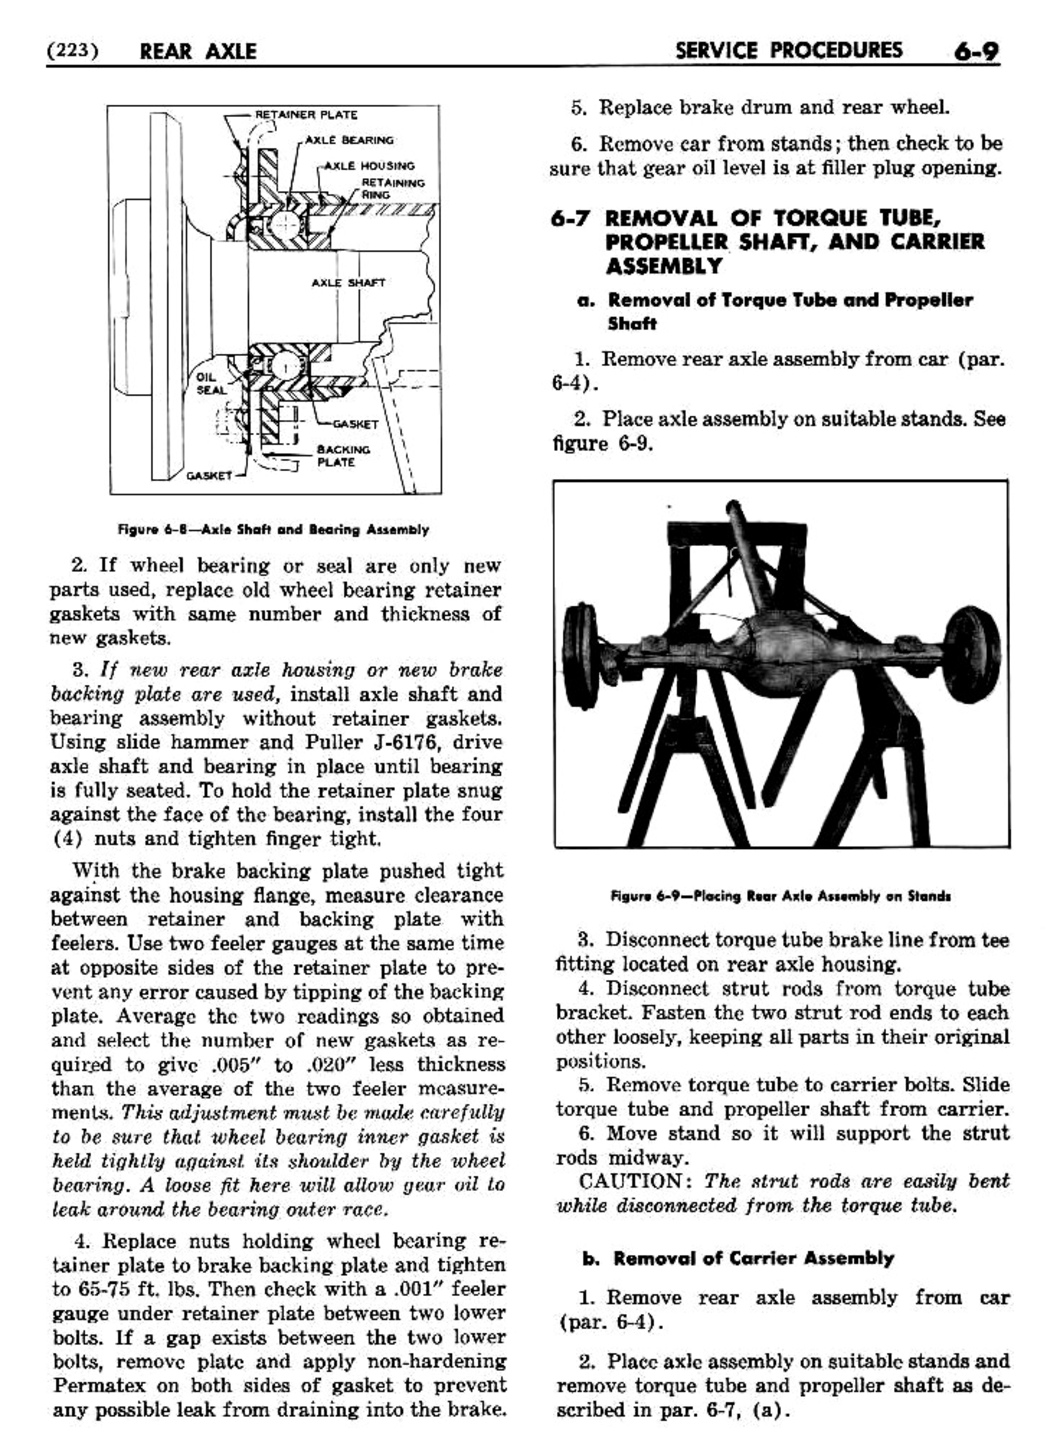 n_07 1956 Buick Shop Manual - Rear Axle-009-009.jpg